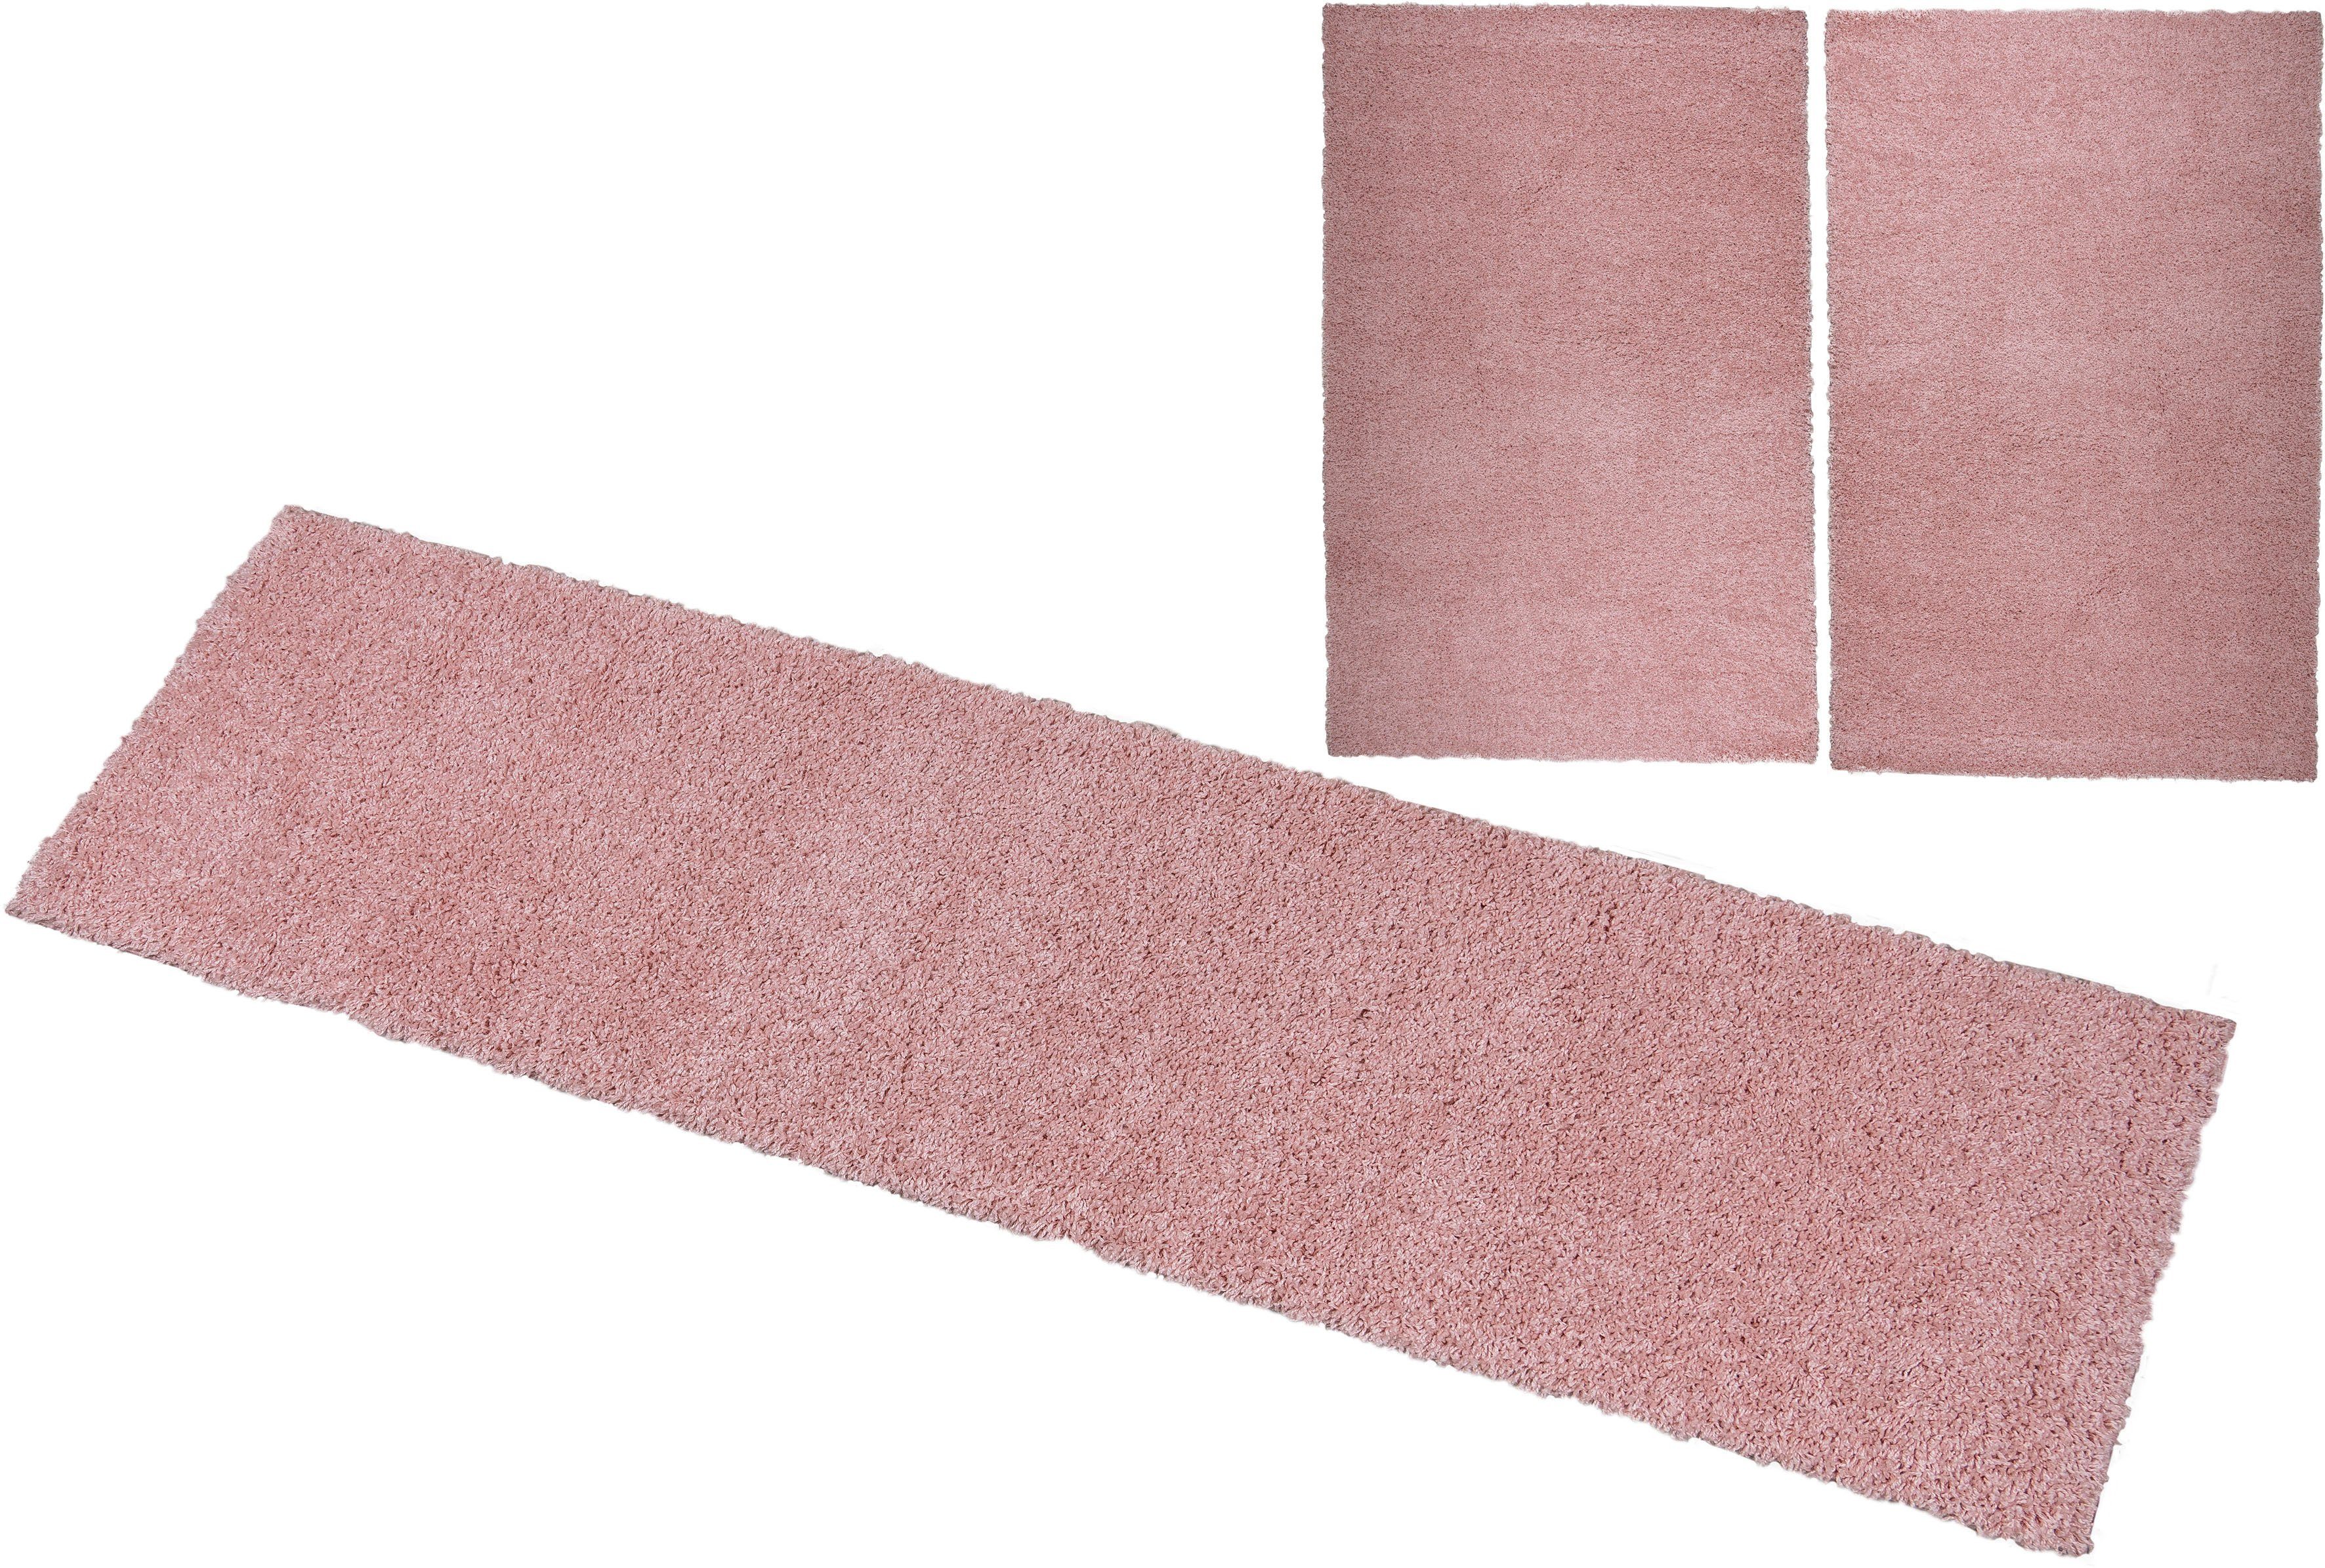 Bettumrandung Shaggy 30 Home oder Bettvorleger, 30 2- mm, Uni-Farben Läufer-Set, gewebt, (3-tlg), 3-teilig, rosa affaire, Höhe